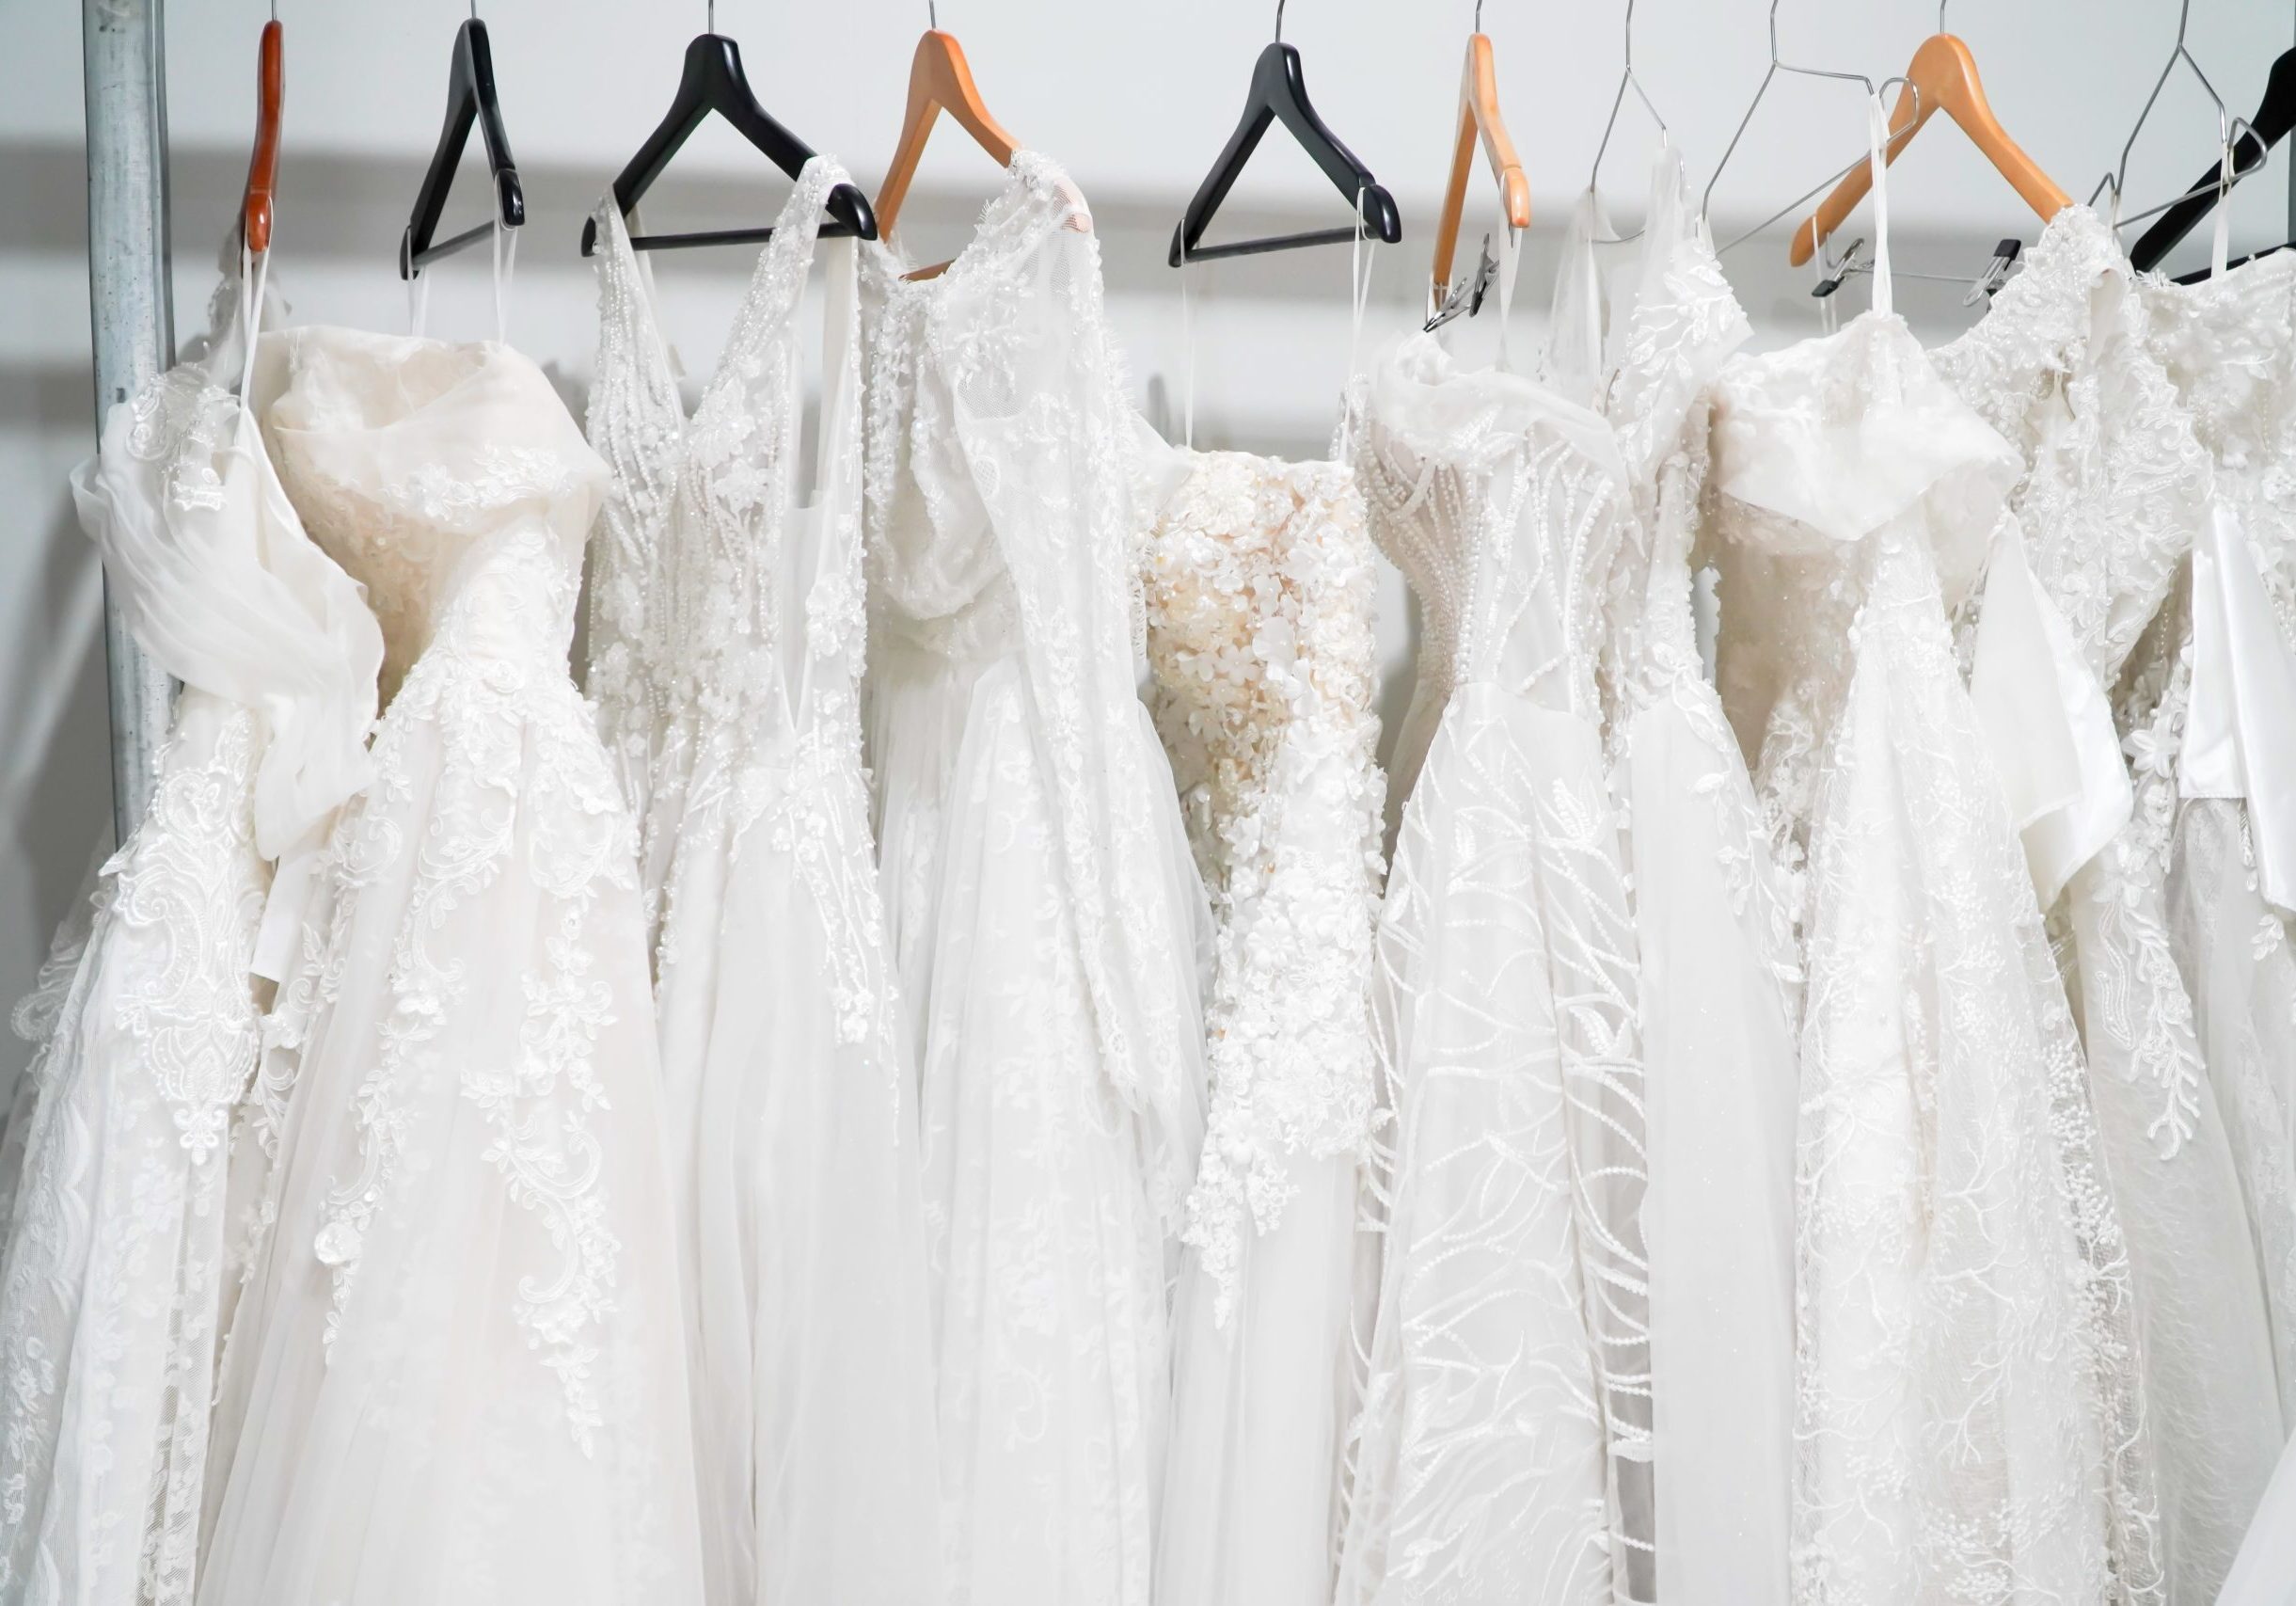 Wedding dresses hanging on a hanger. Fashion look.Beautiful bridal dress on hangers